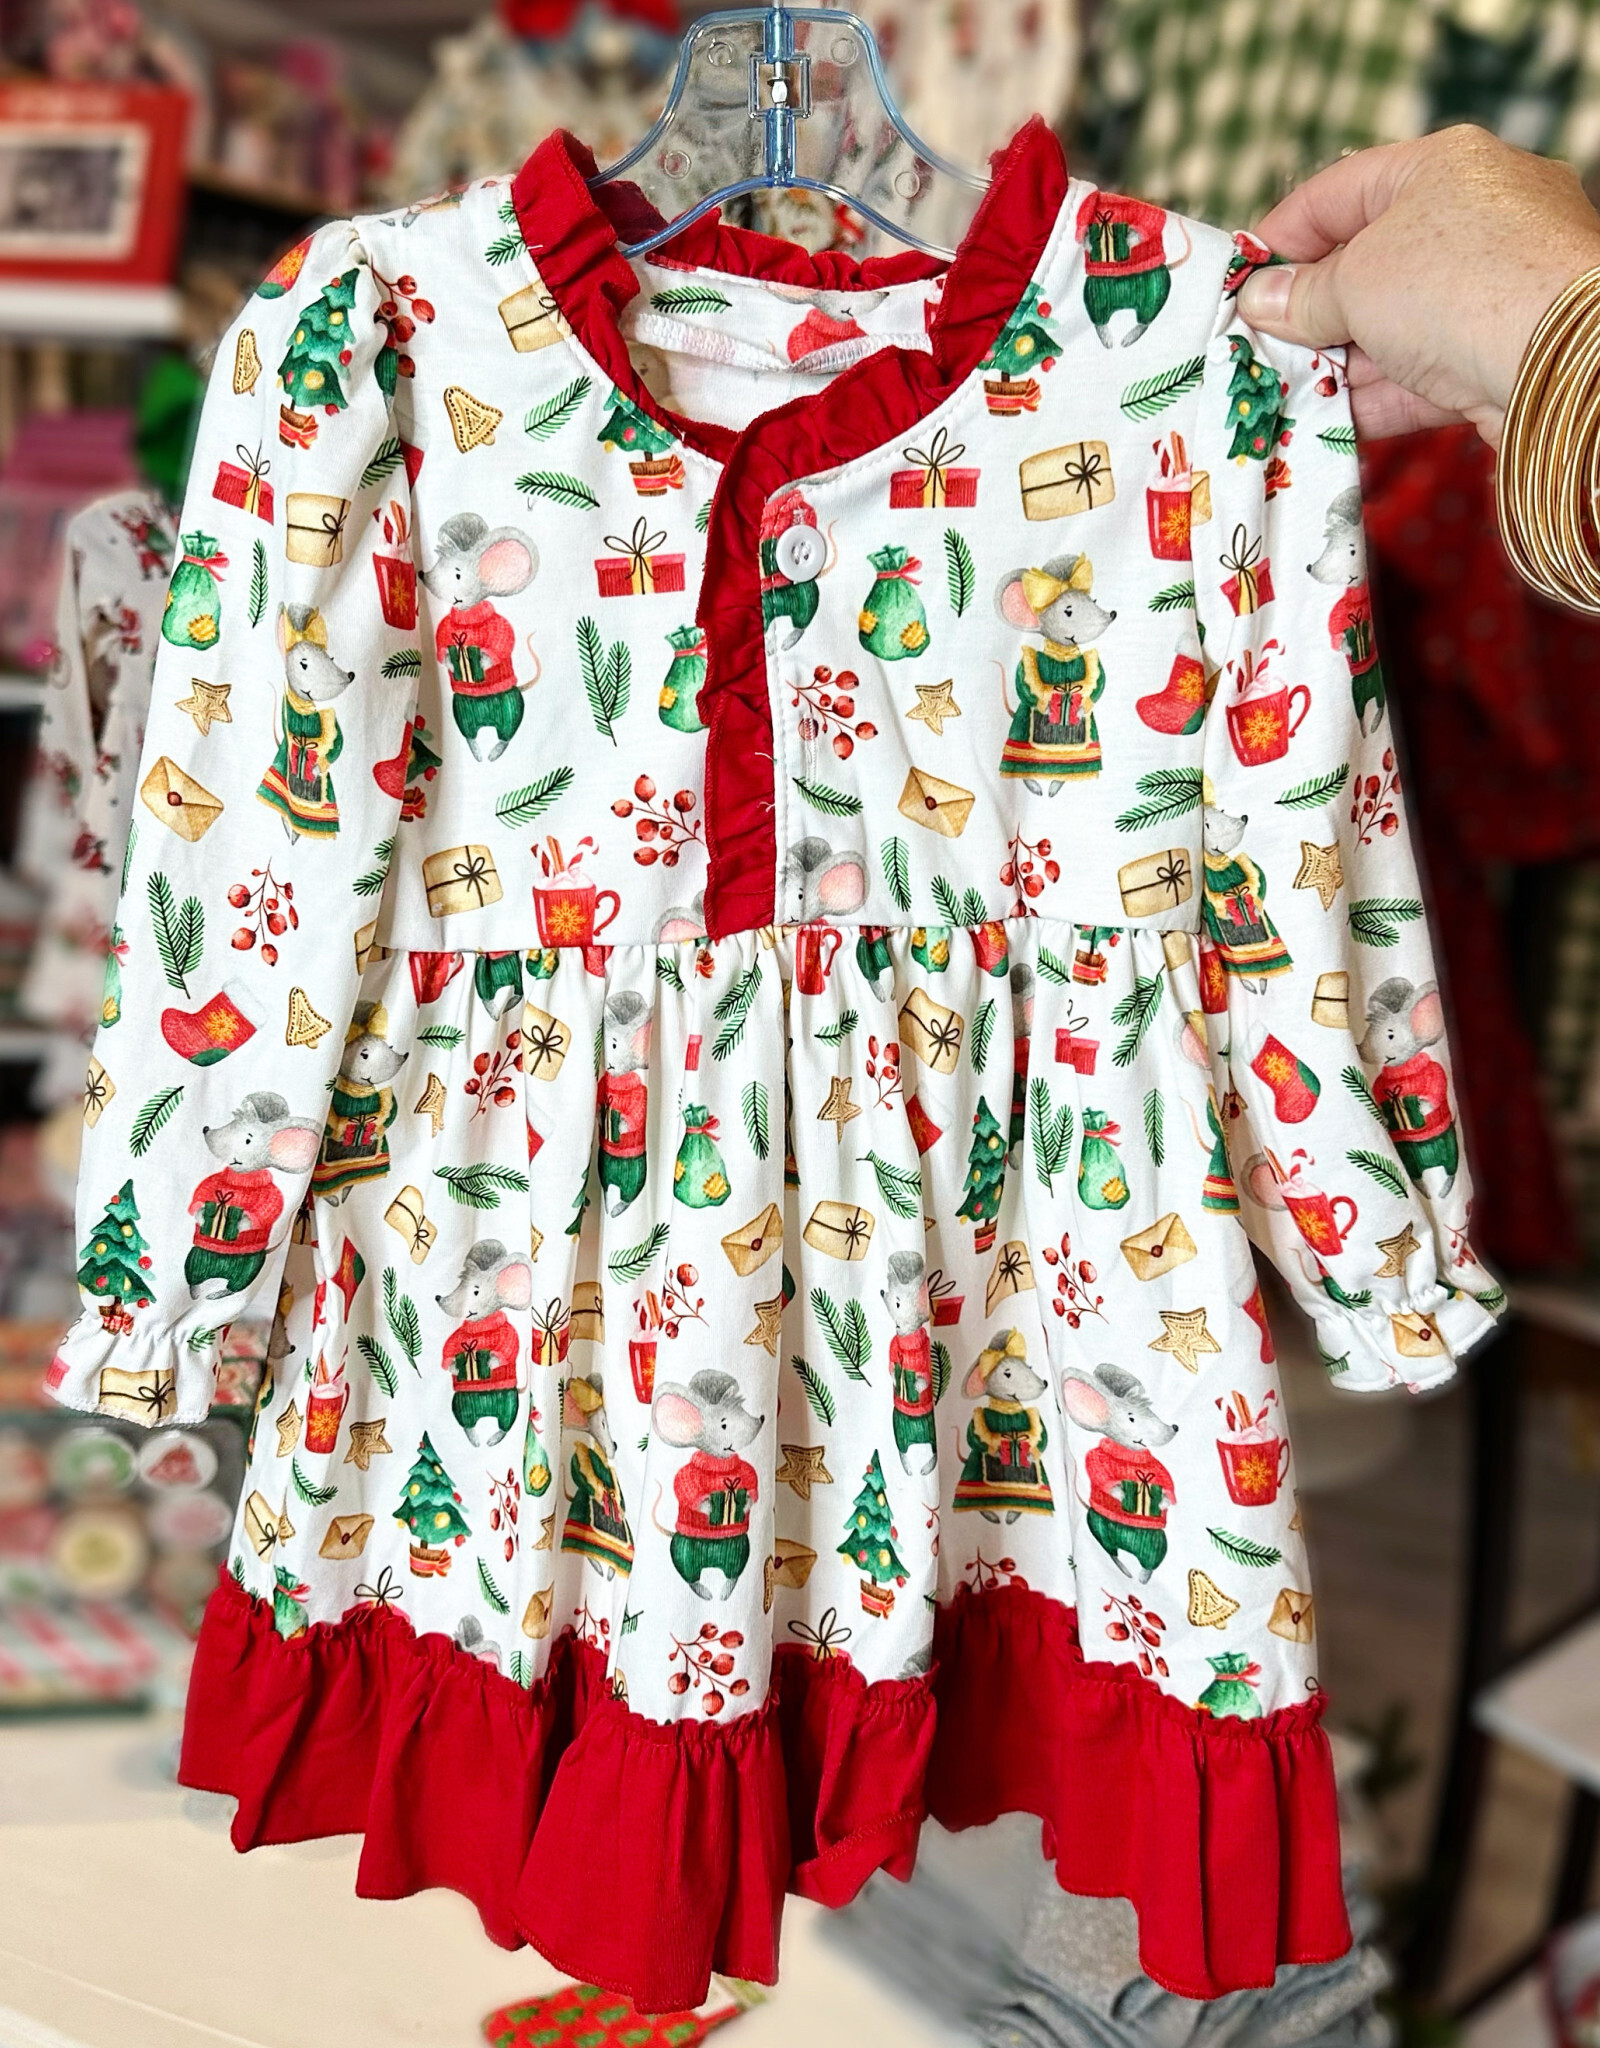 Honeydew Merry Mouse Christmas Dress